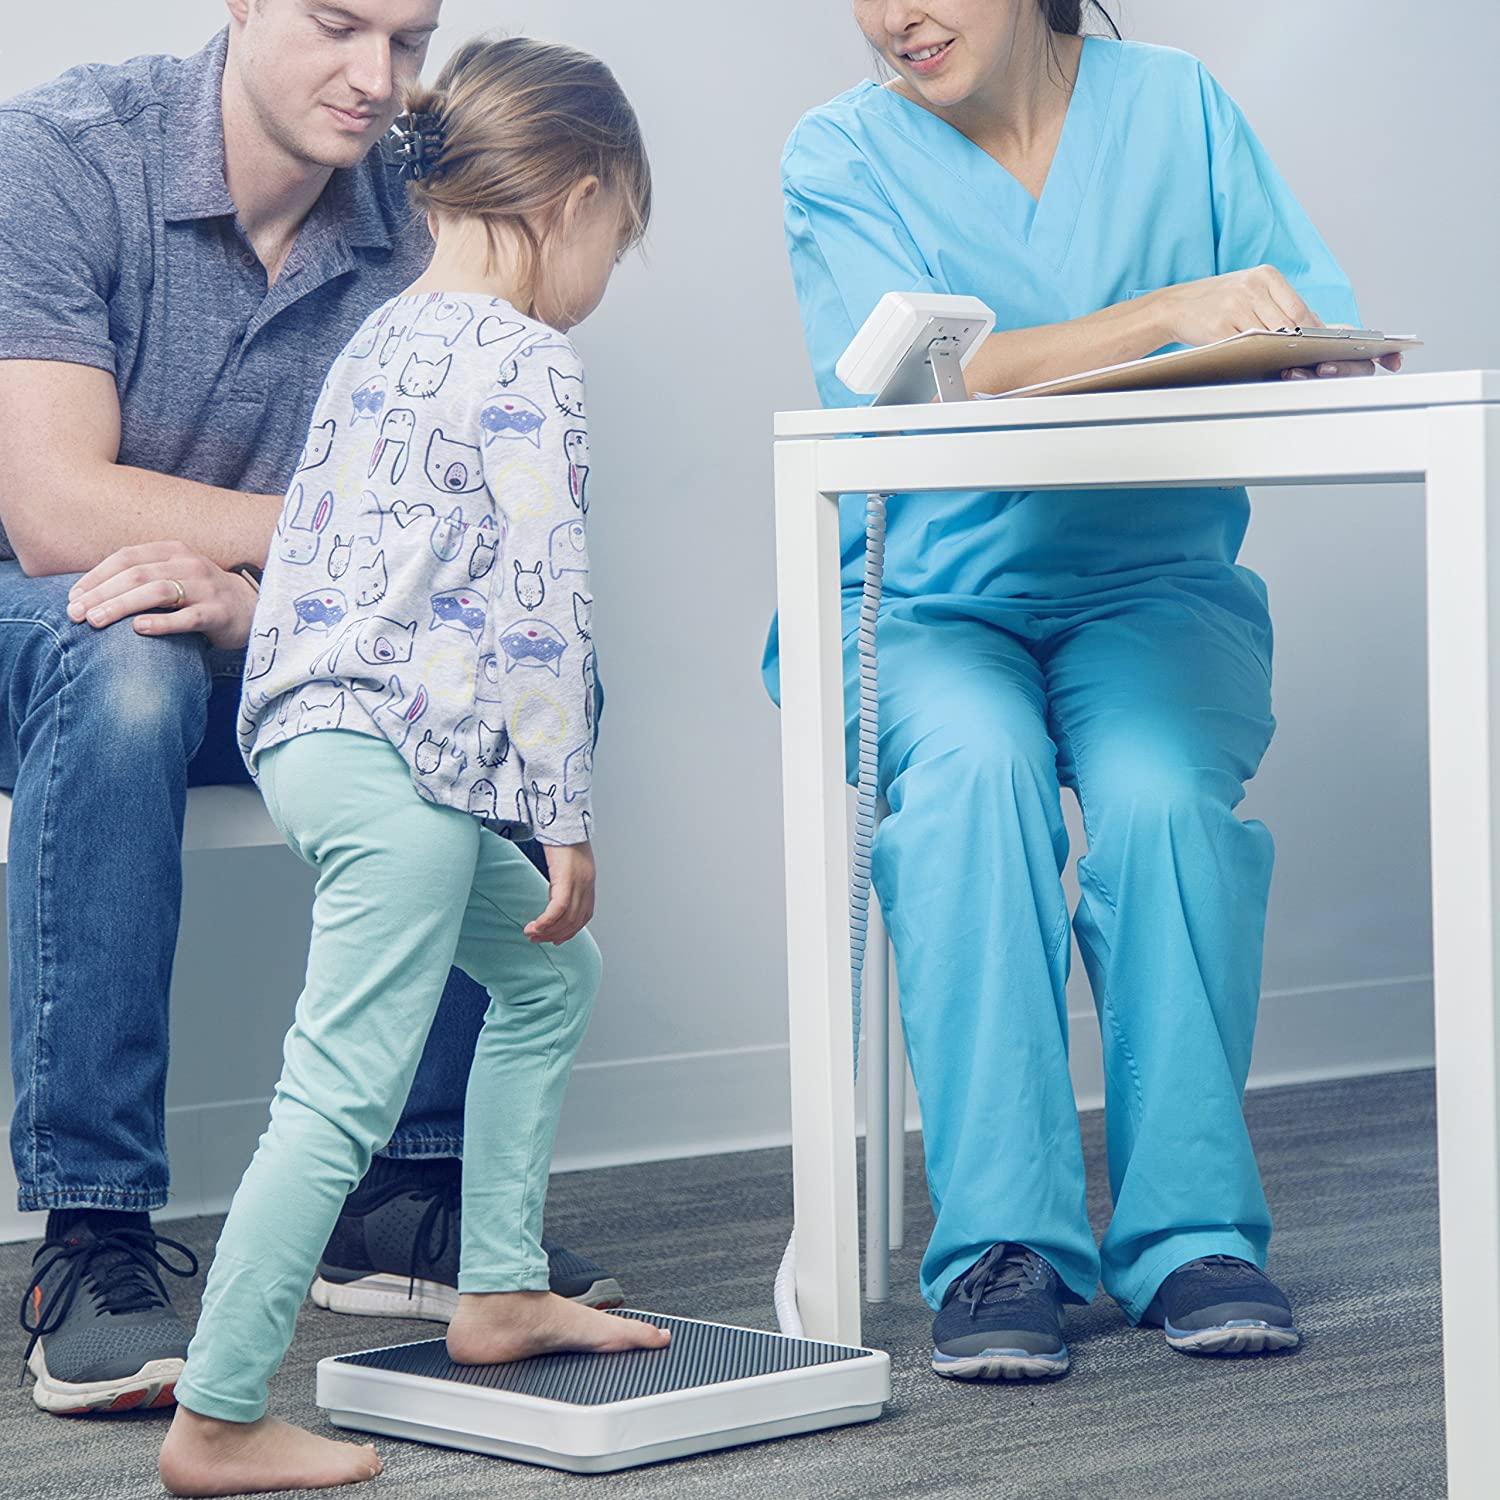 Medical Grade Floor Scale - Portable - Easy to Read Digital Display - Heavy  Duty - Home, Hospital & Physician Use - Pound & Kilogram Settings - 12 x